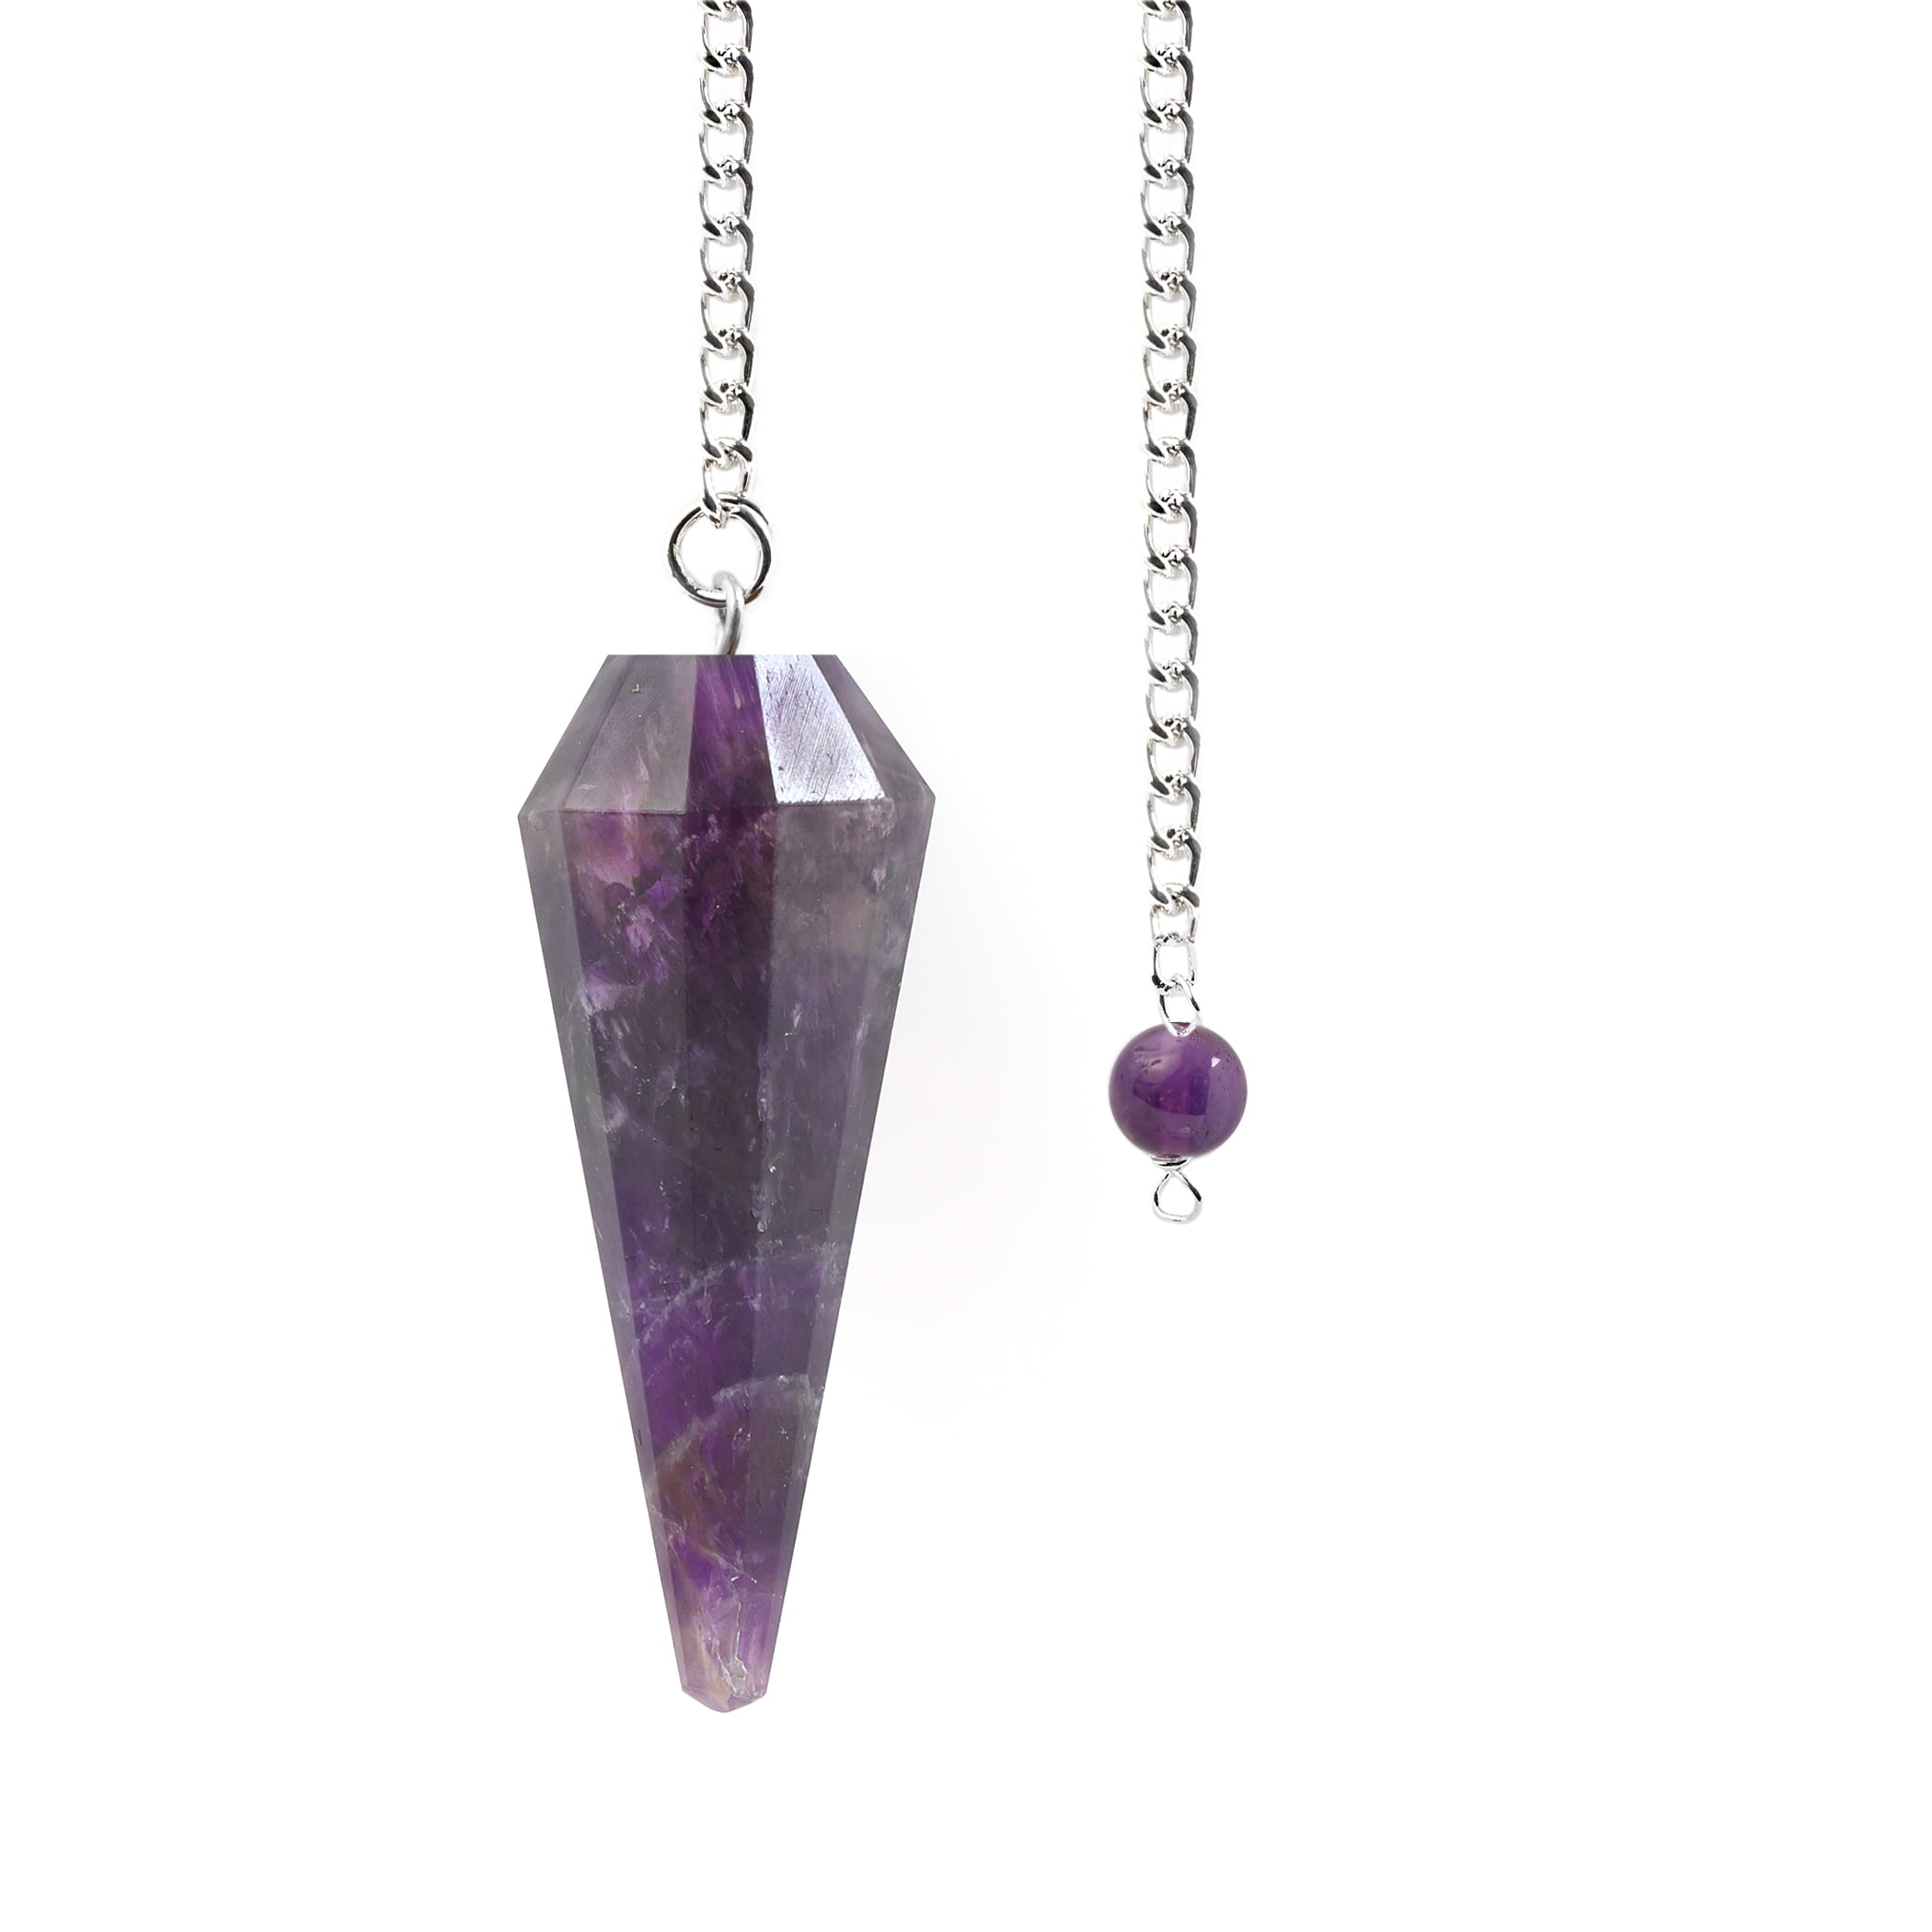 50-60 MM Long Natural Amethyst Pyramid Crystal Point Dowsing Pendulum Set Gift 